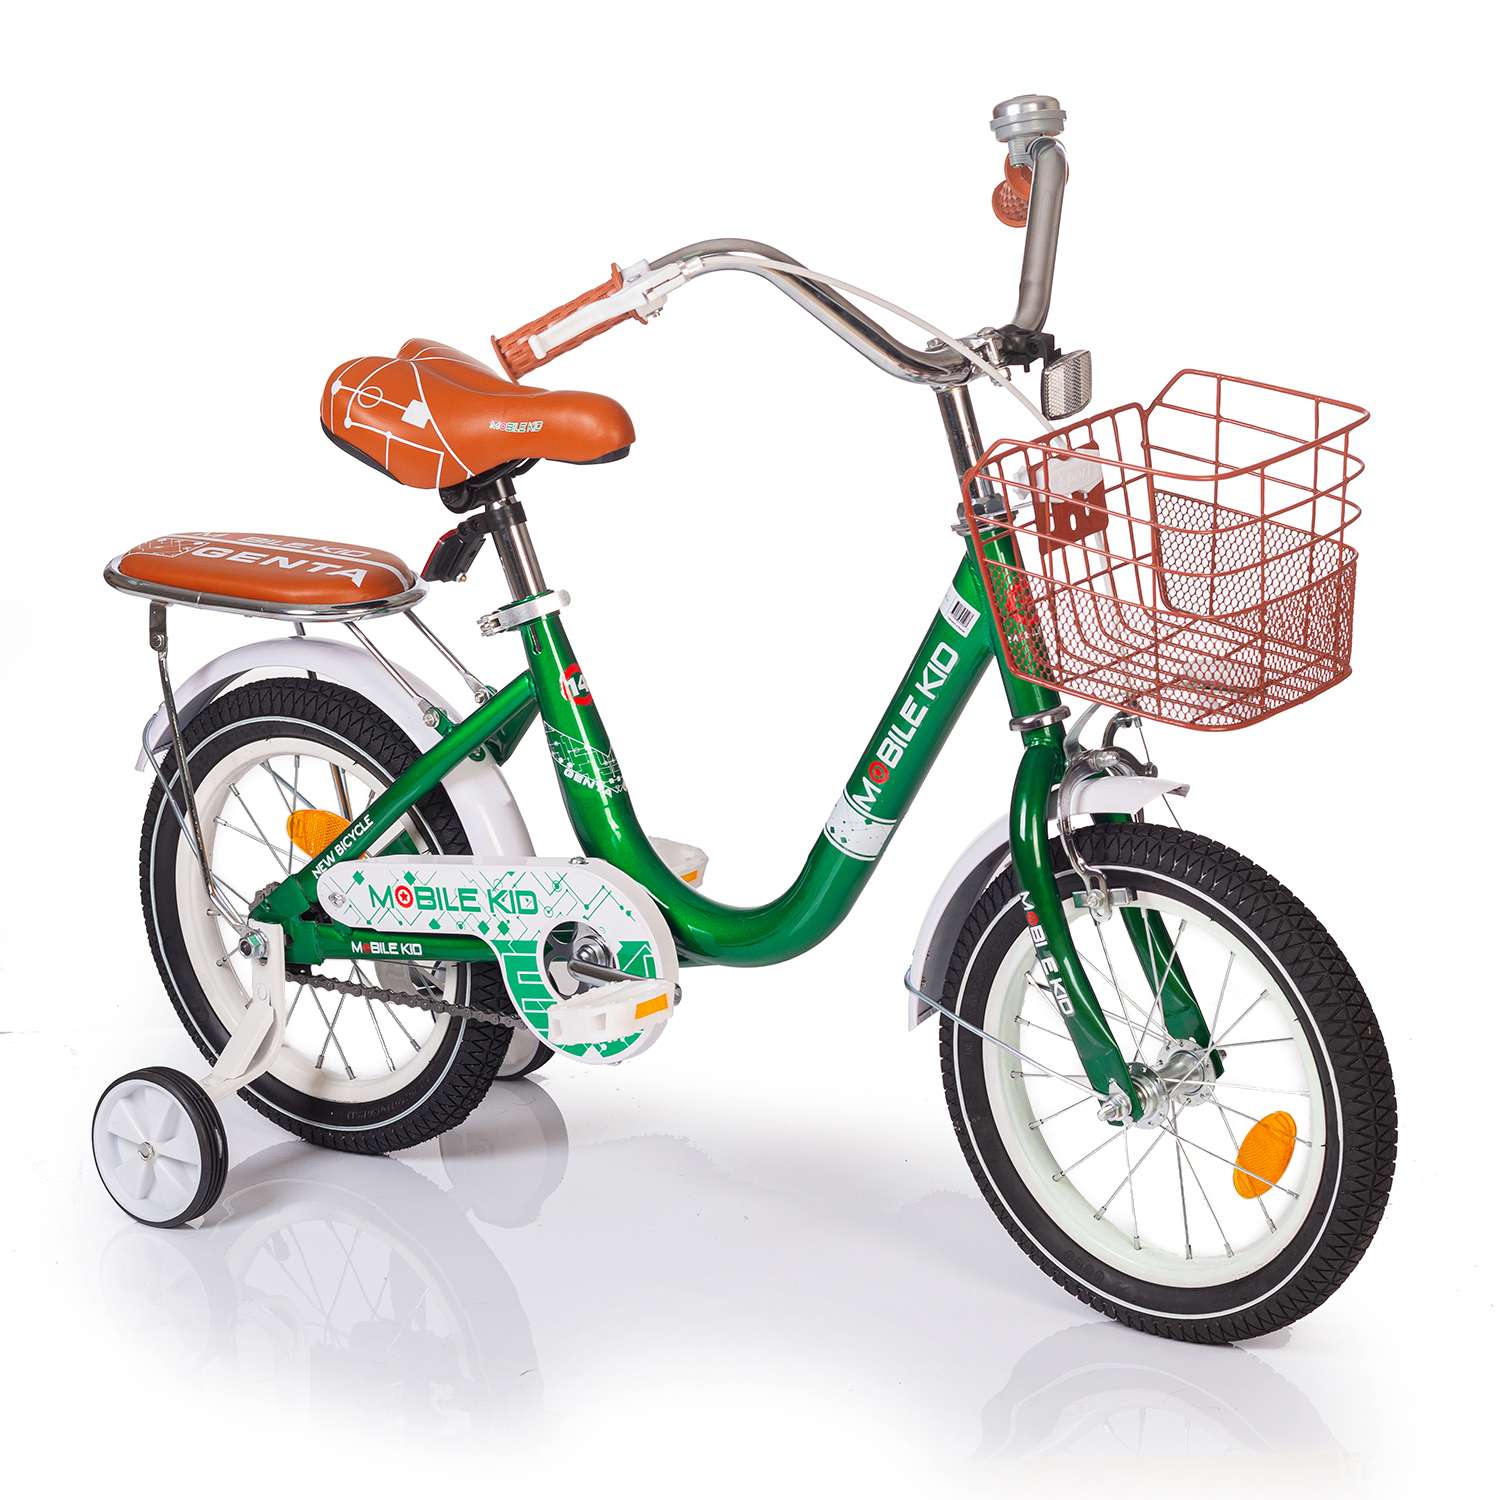 Велосипед детский Mobile Kid Genta 14 - фото 1